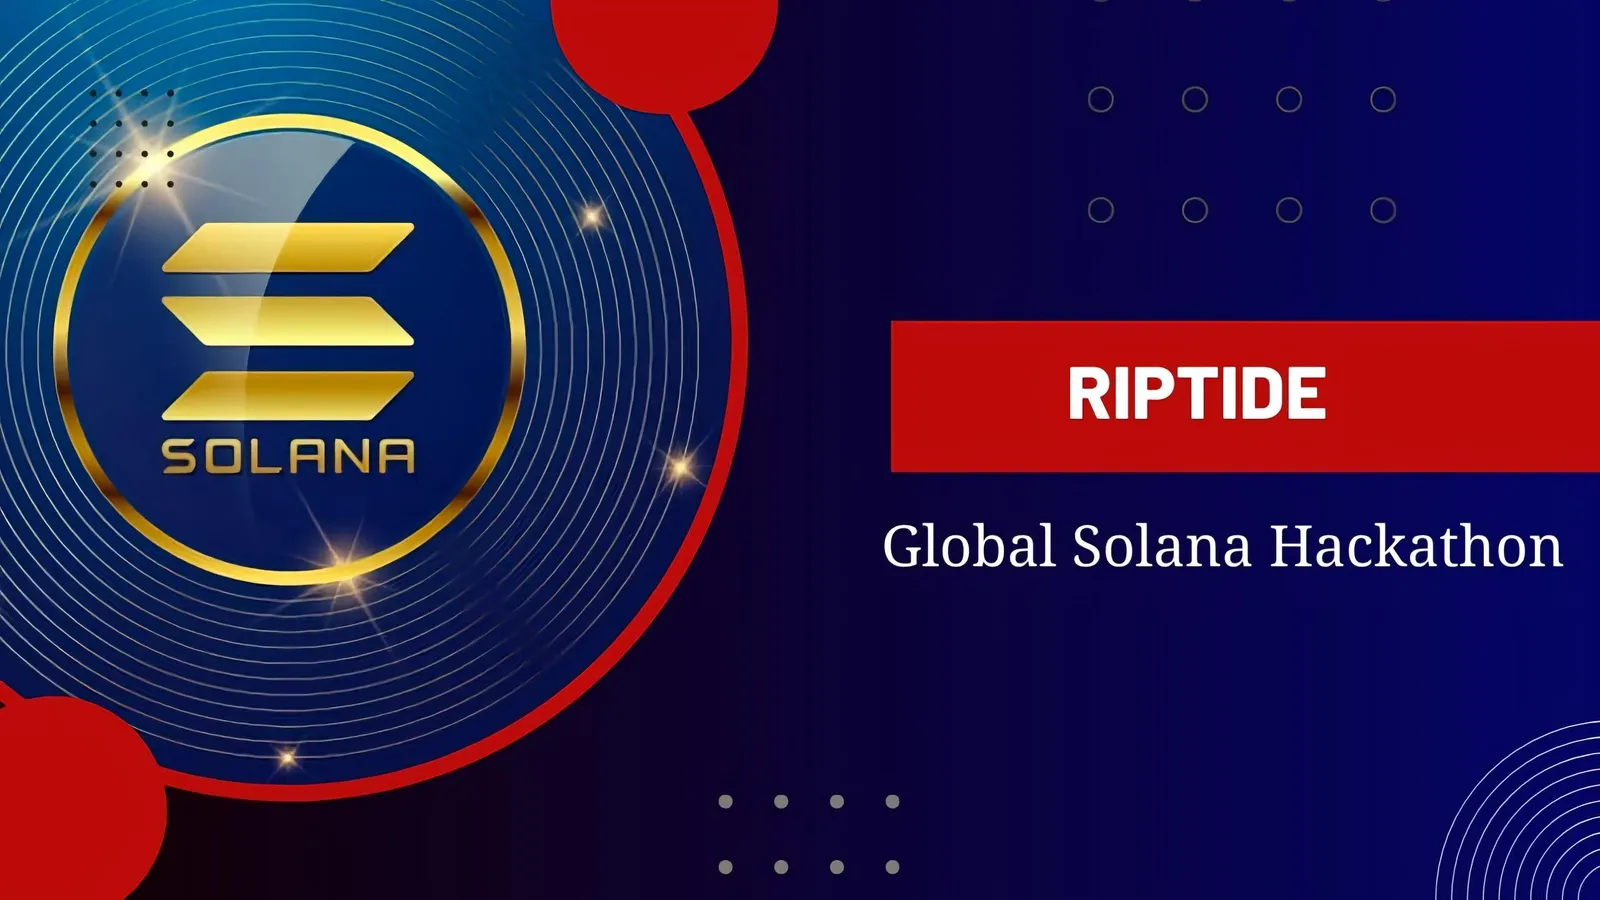 RIPTIDE - Global Solana Hackathon